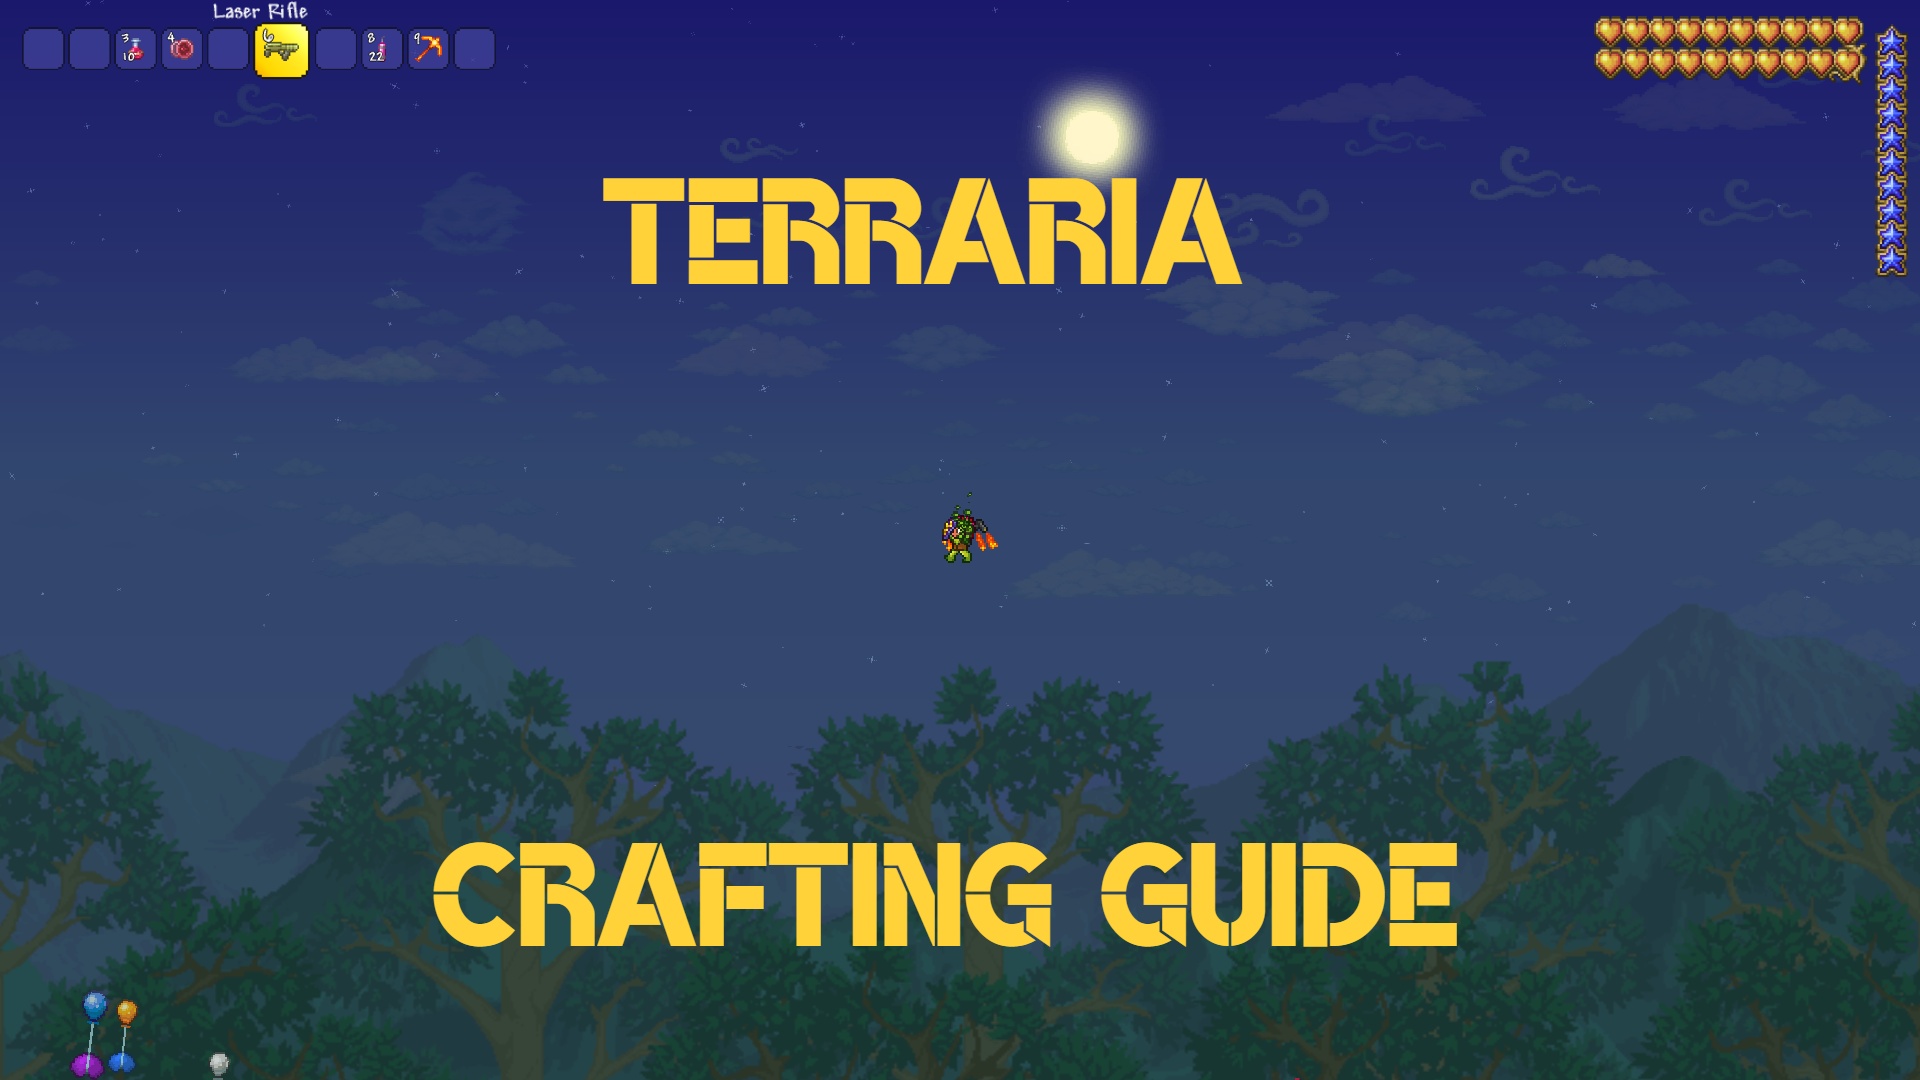 fjerkræ marxistisk Guinness Terraria Crafting: The Definitive Guide - eXputer.com